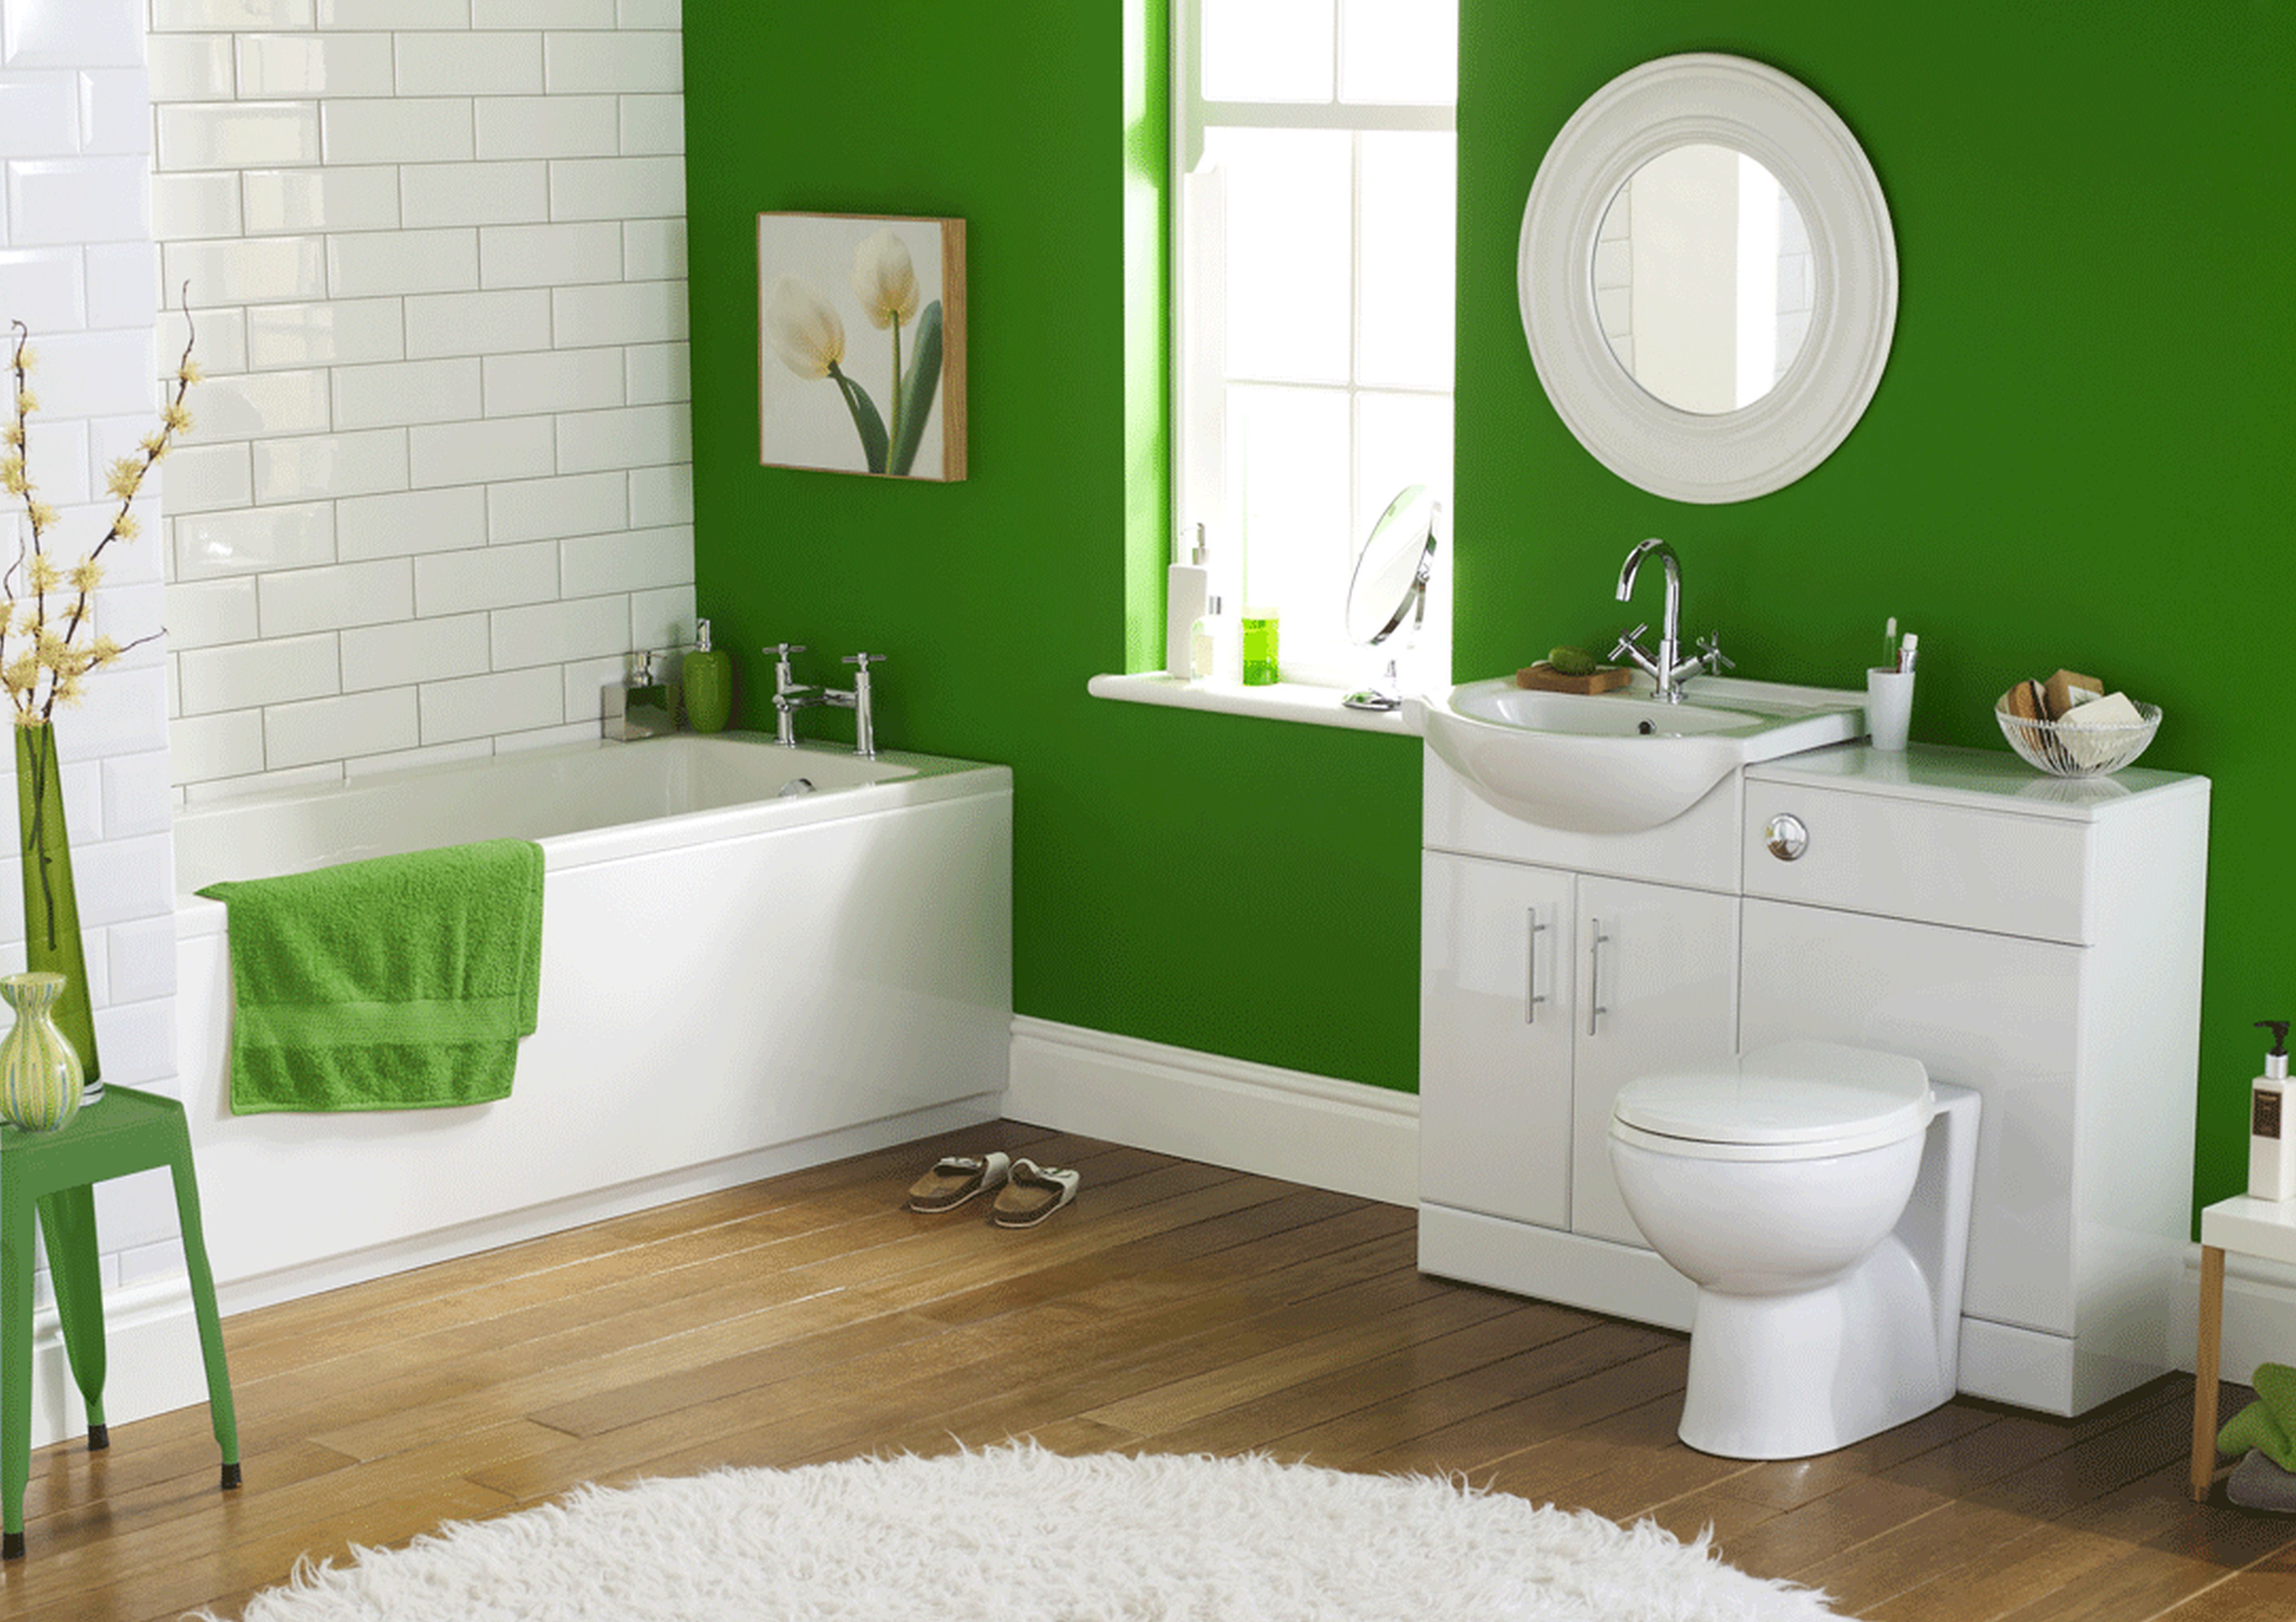 Ванной комнаты распродажа. Салатовая ванная. Бело зеленая ванная комната. Ванная в салатовом цвете. Ванная комната в зеленом цвете.